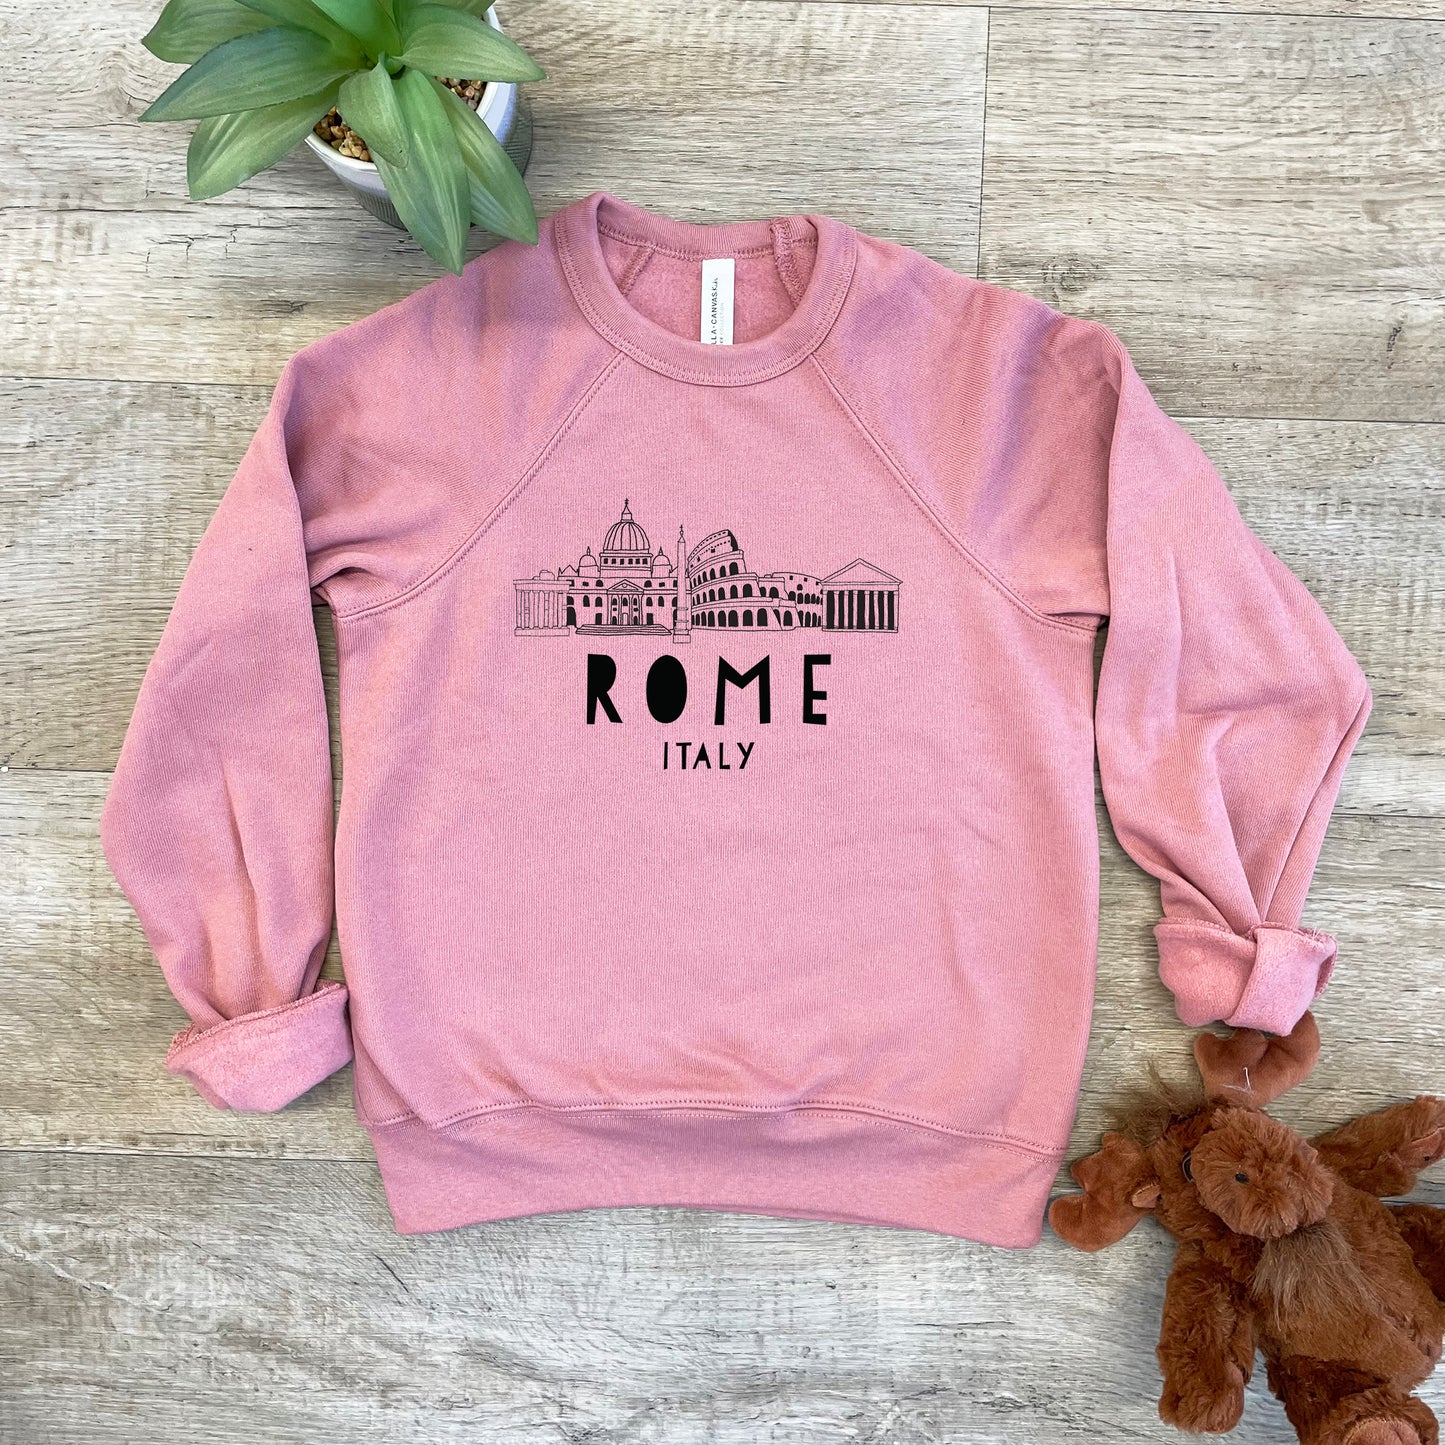 Rome, Italy Skyline - Kid's Sweatshirt - Heather Gray or Mauve